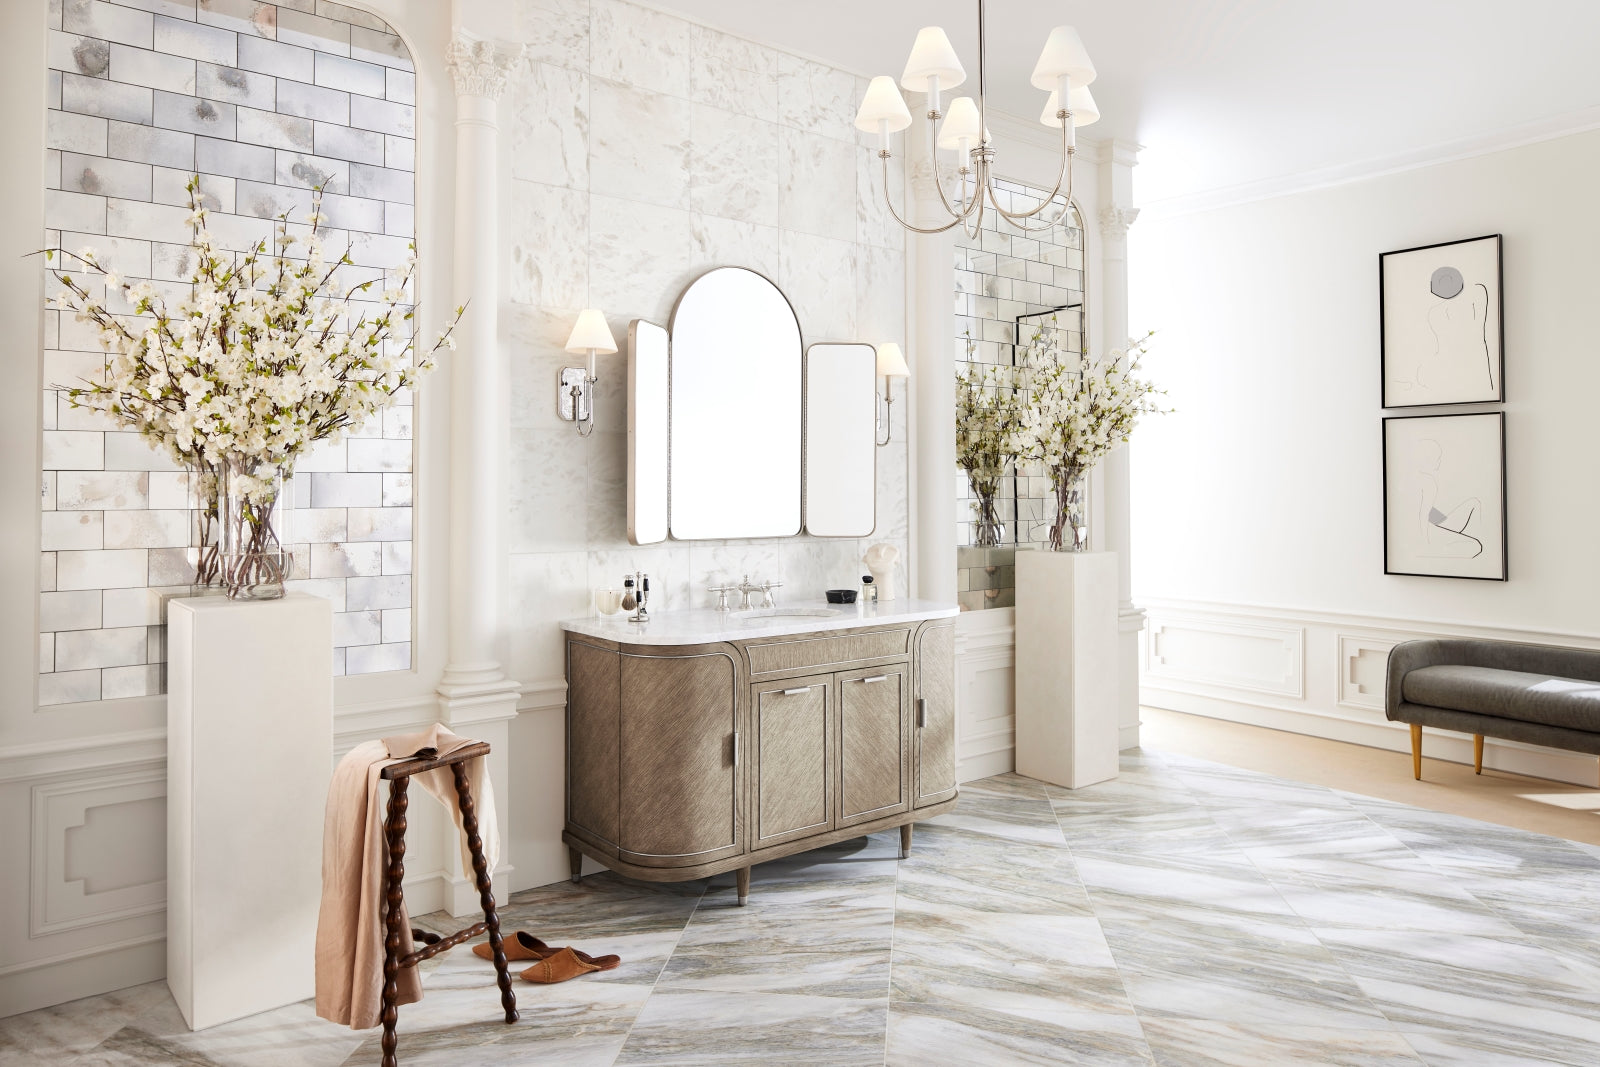 10 Bathroom Renovation Ideas to Make Your Home More Stylish